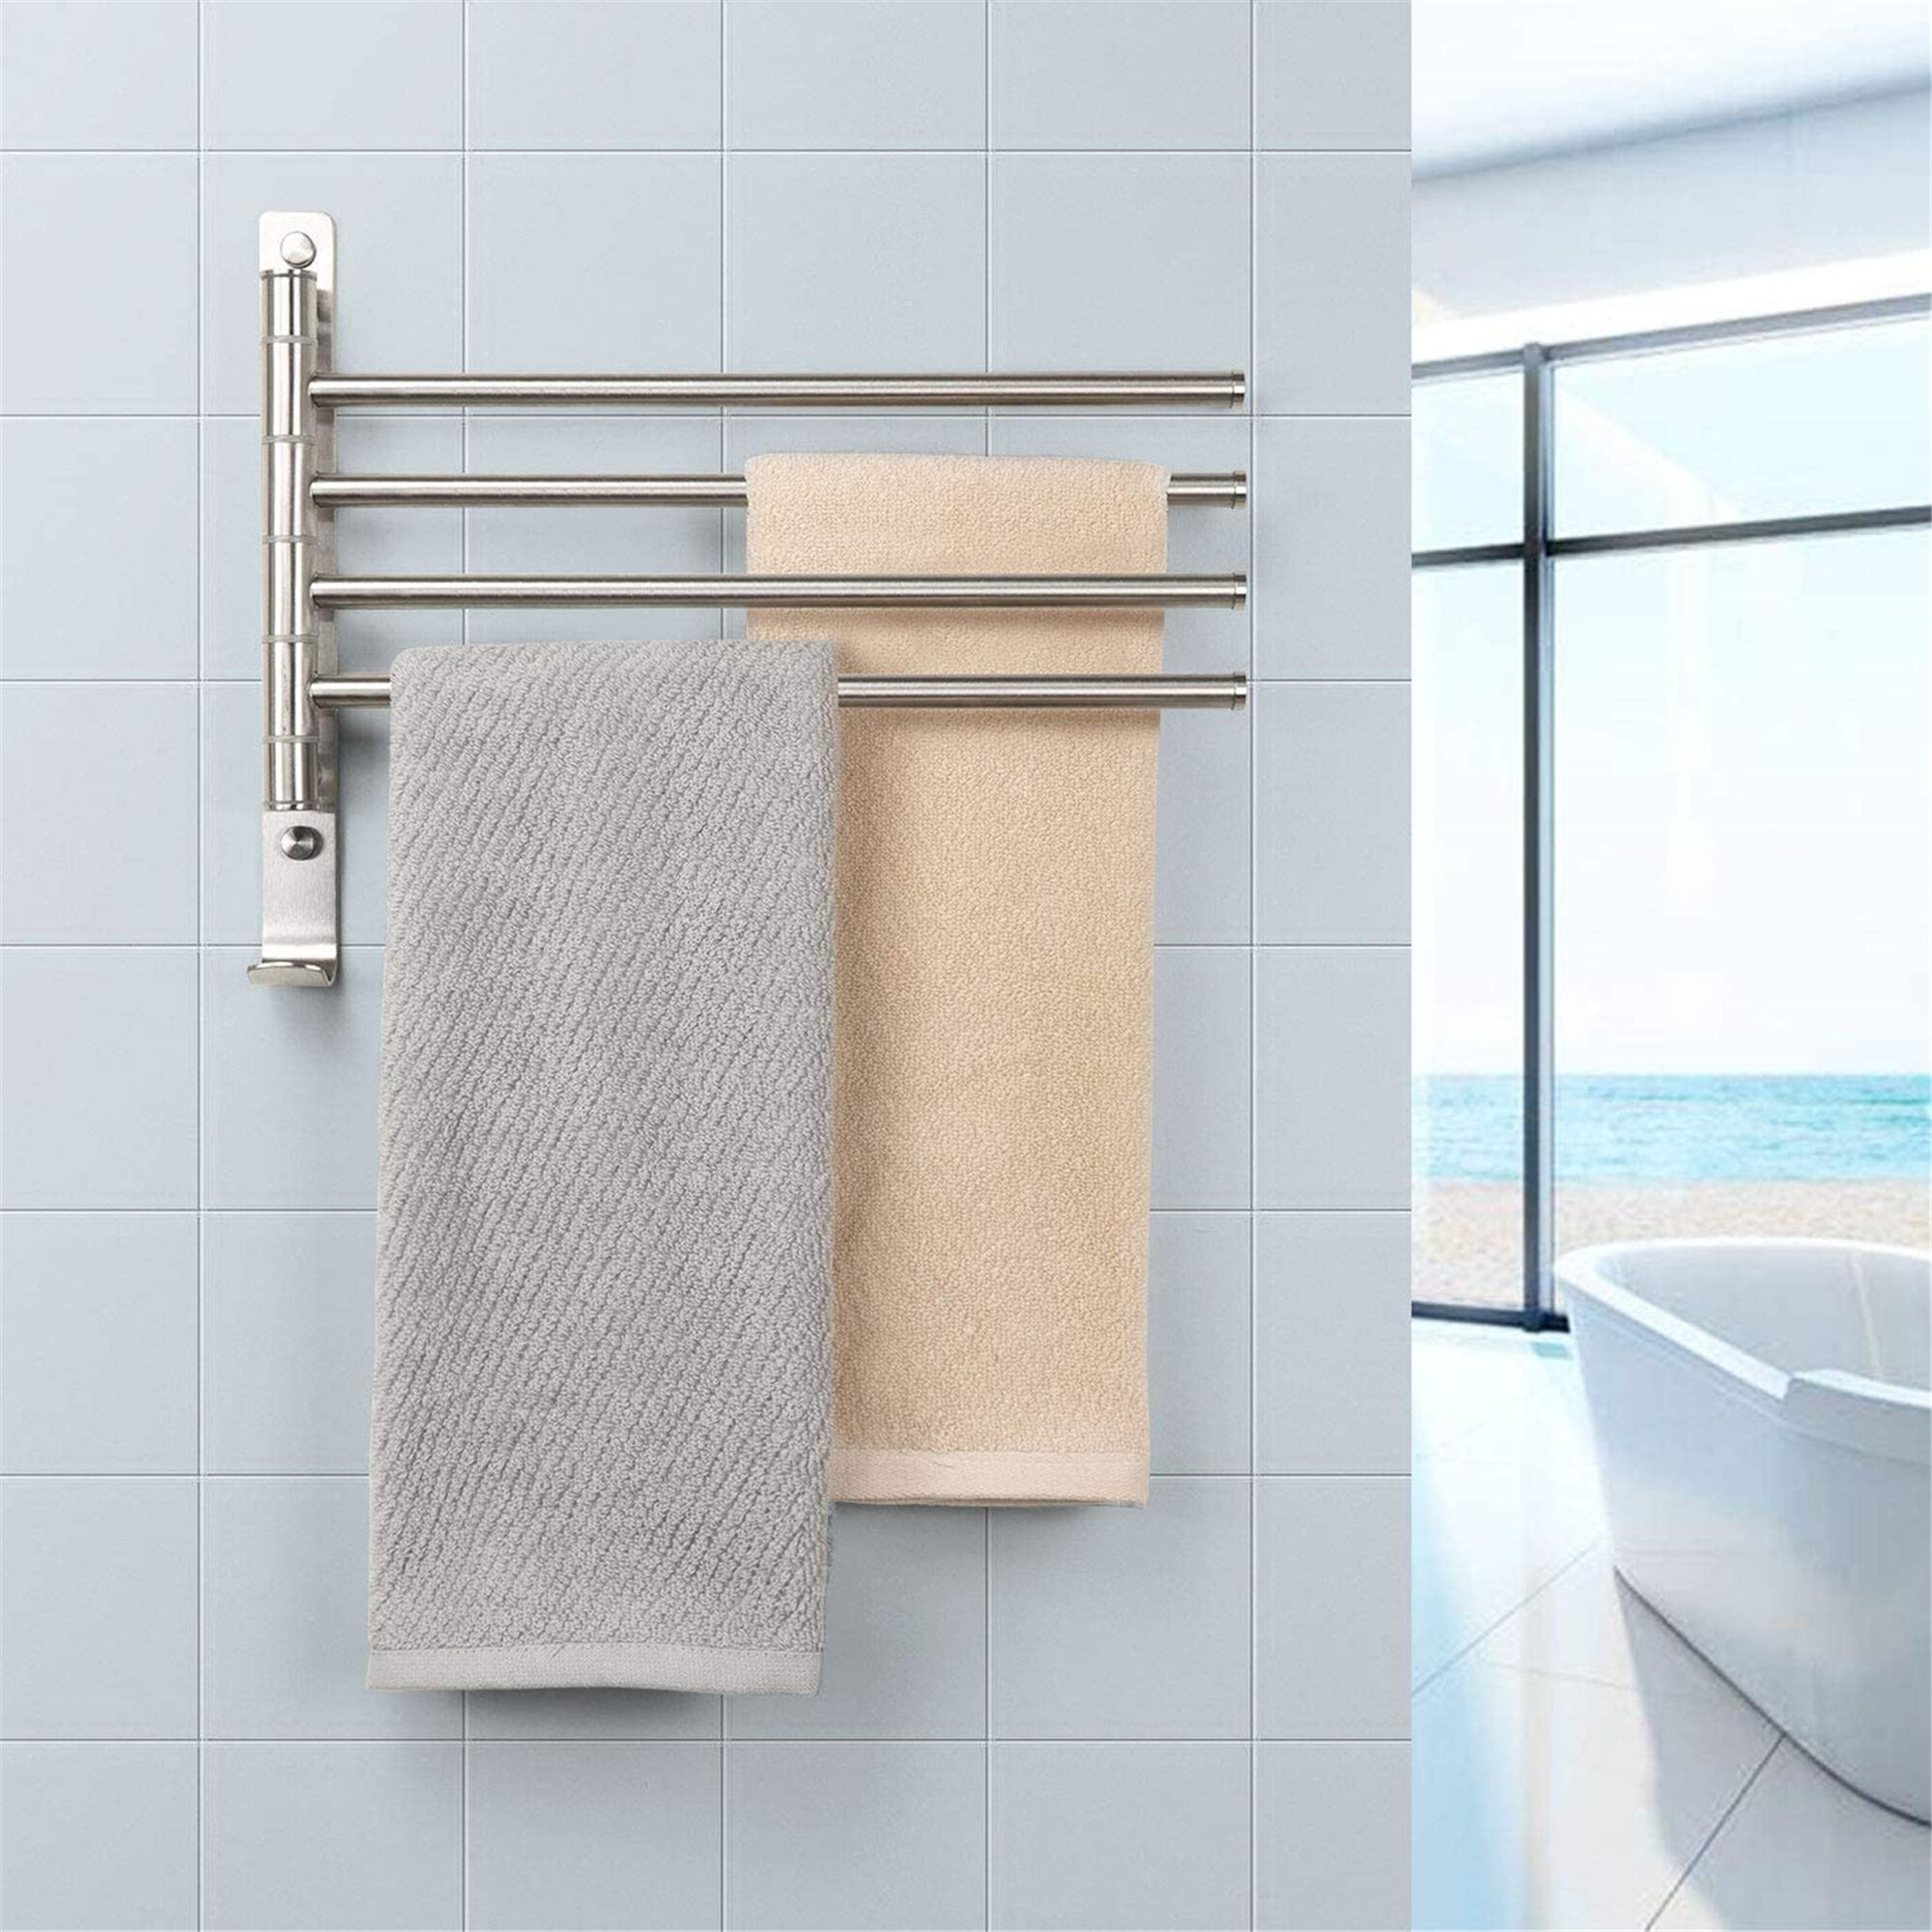 Shanglixiansenxinmaoyi Swivel Towel Bar 4 Arm Bathroom Towel Holder Wall Mounted Swing Out Towel Rack Rustproof Brushed Finish Wayfair